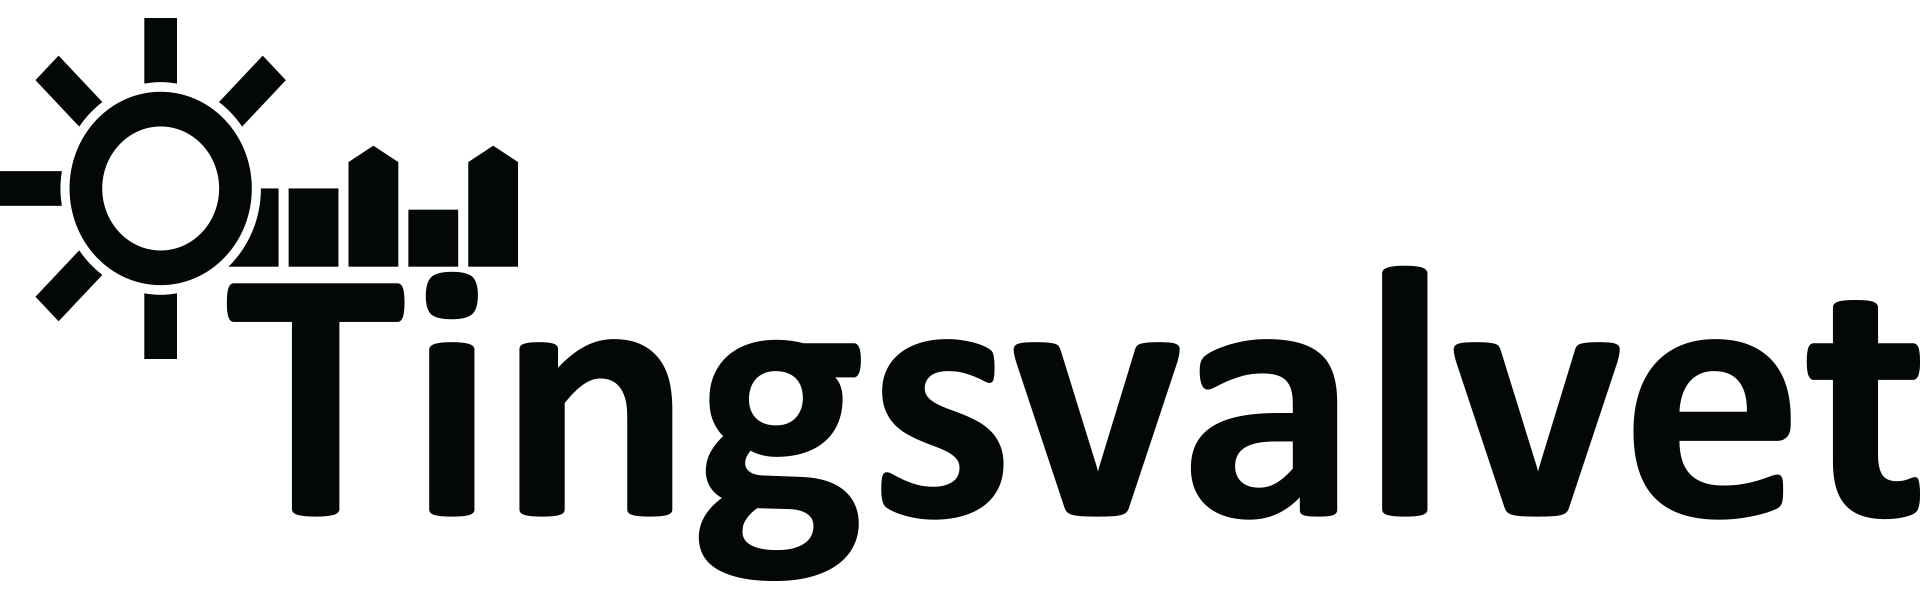 Tingsvalvet Fastighets AB Logotyp